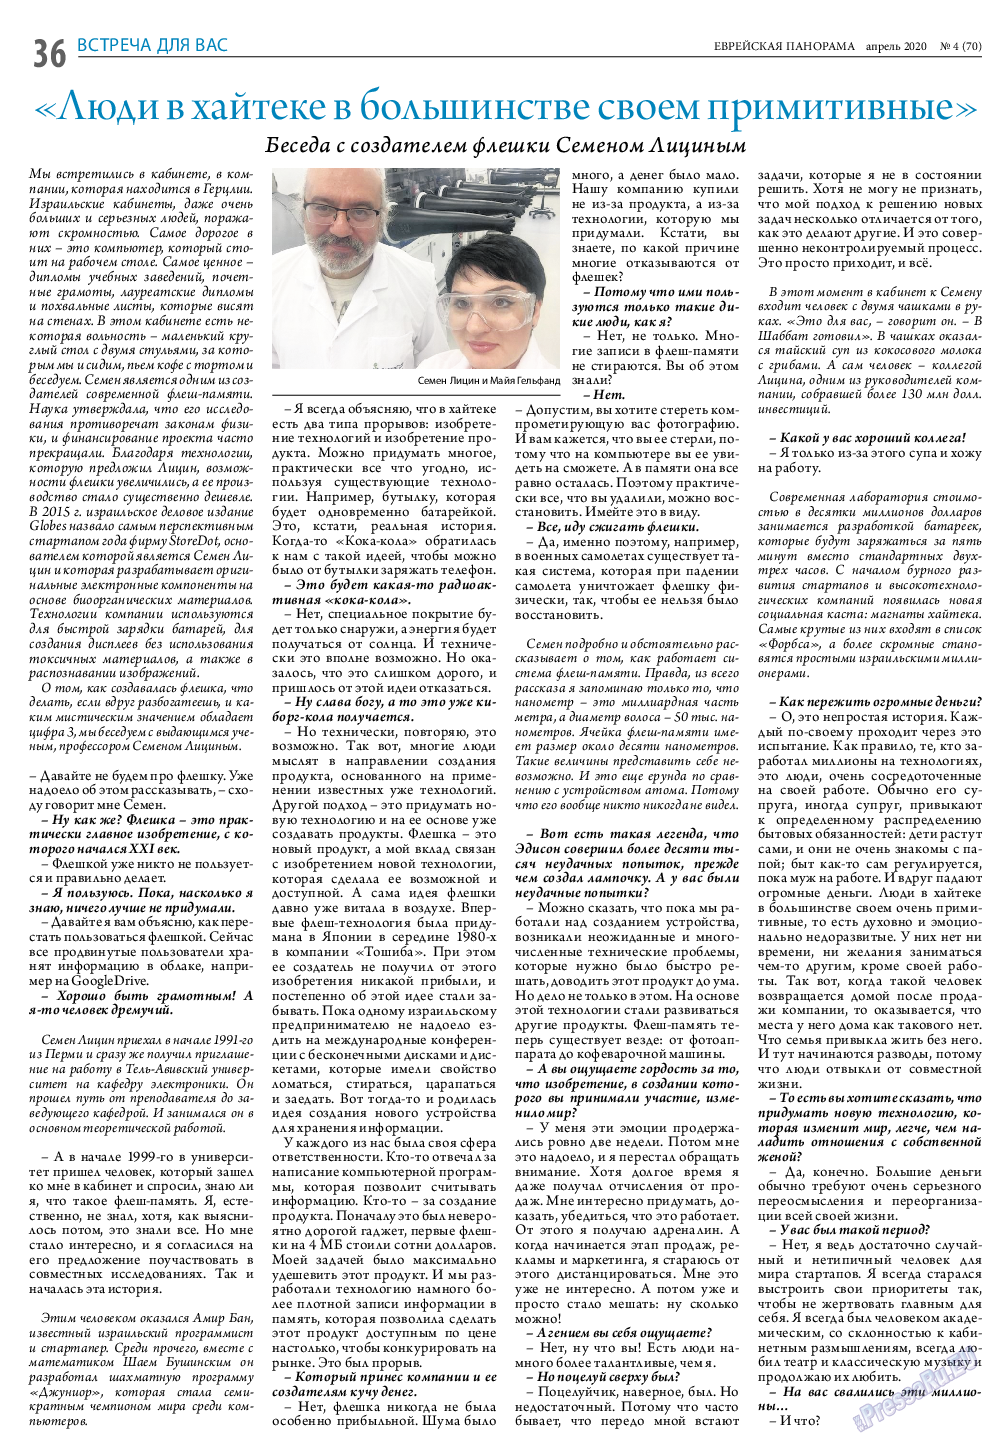 Еврейская панорама, газета. 2020 №4 стр.36